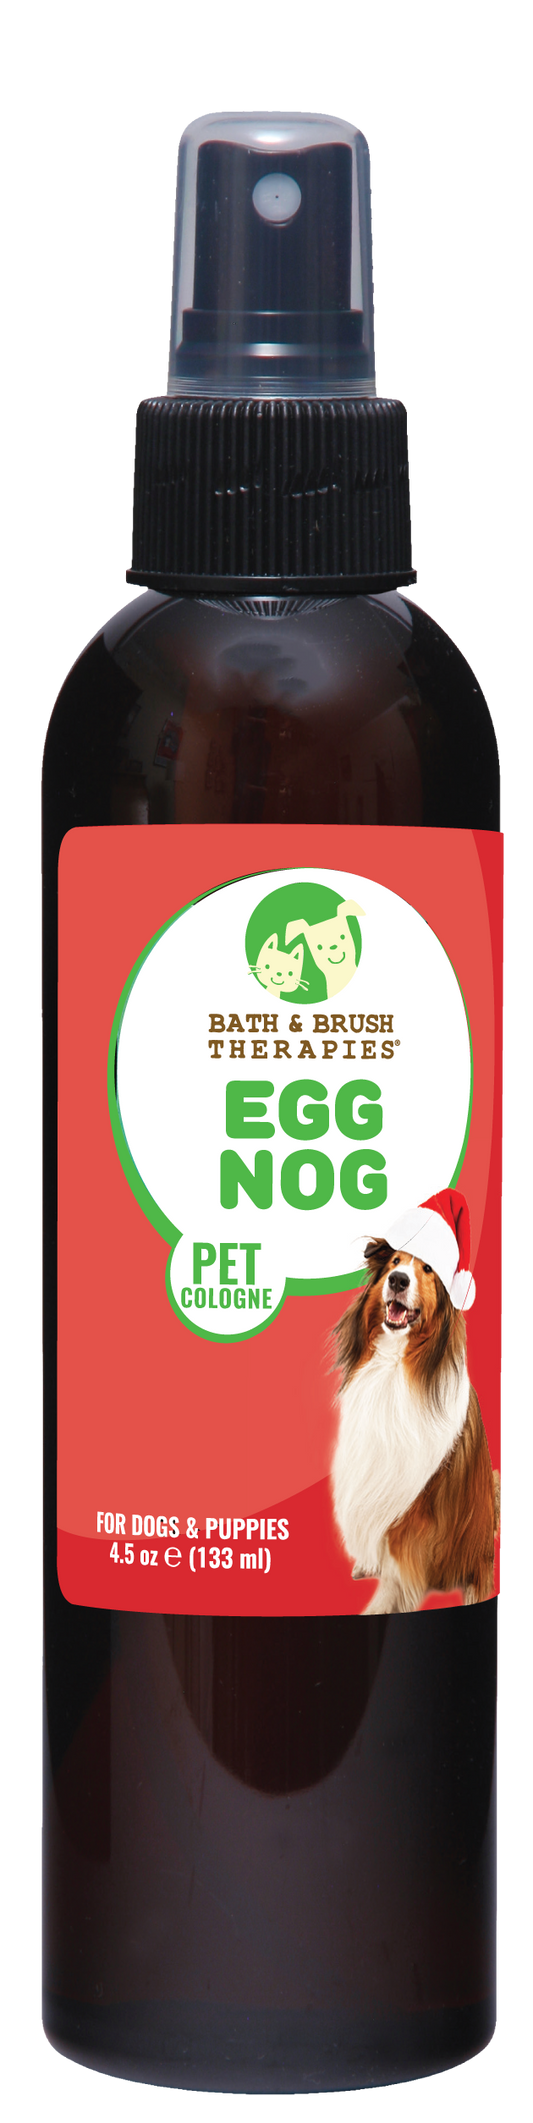 Eggnog Pet Cologne | Bath & Brush Therapies®